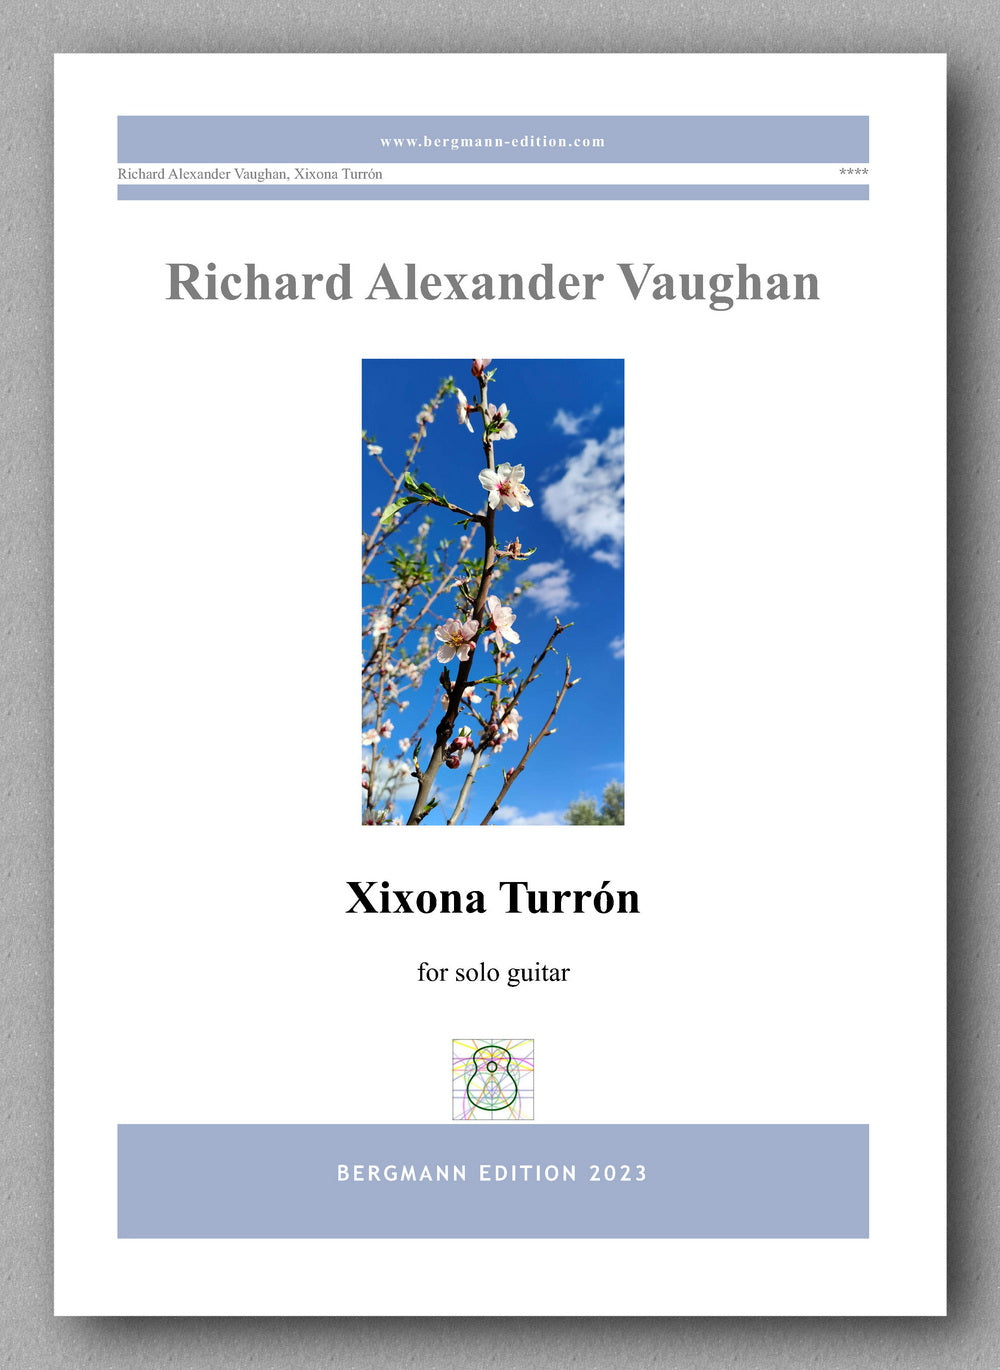 Richard Alexander Vaughan, Xixona Turrón - preview of the cover